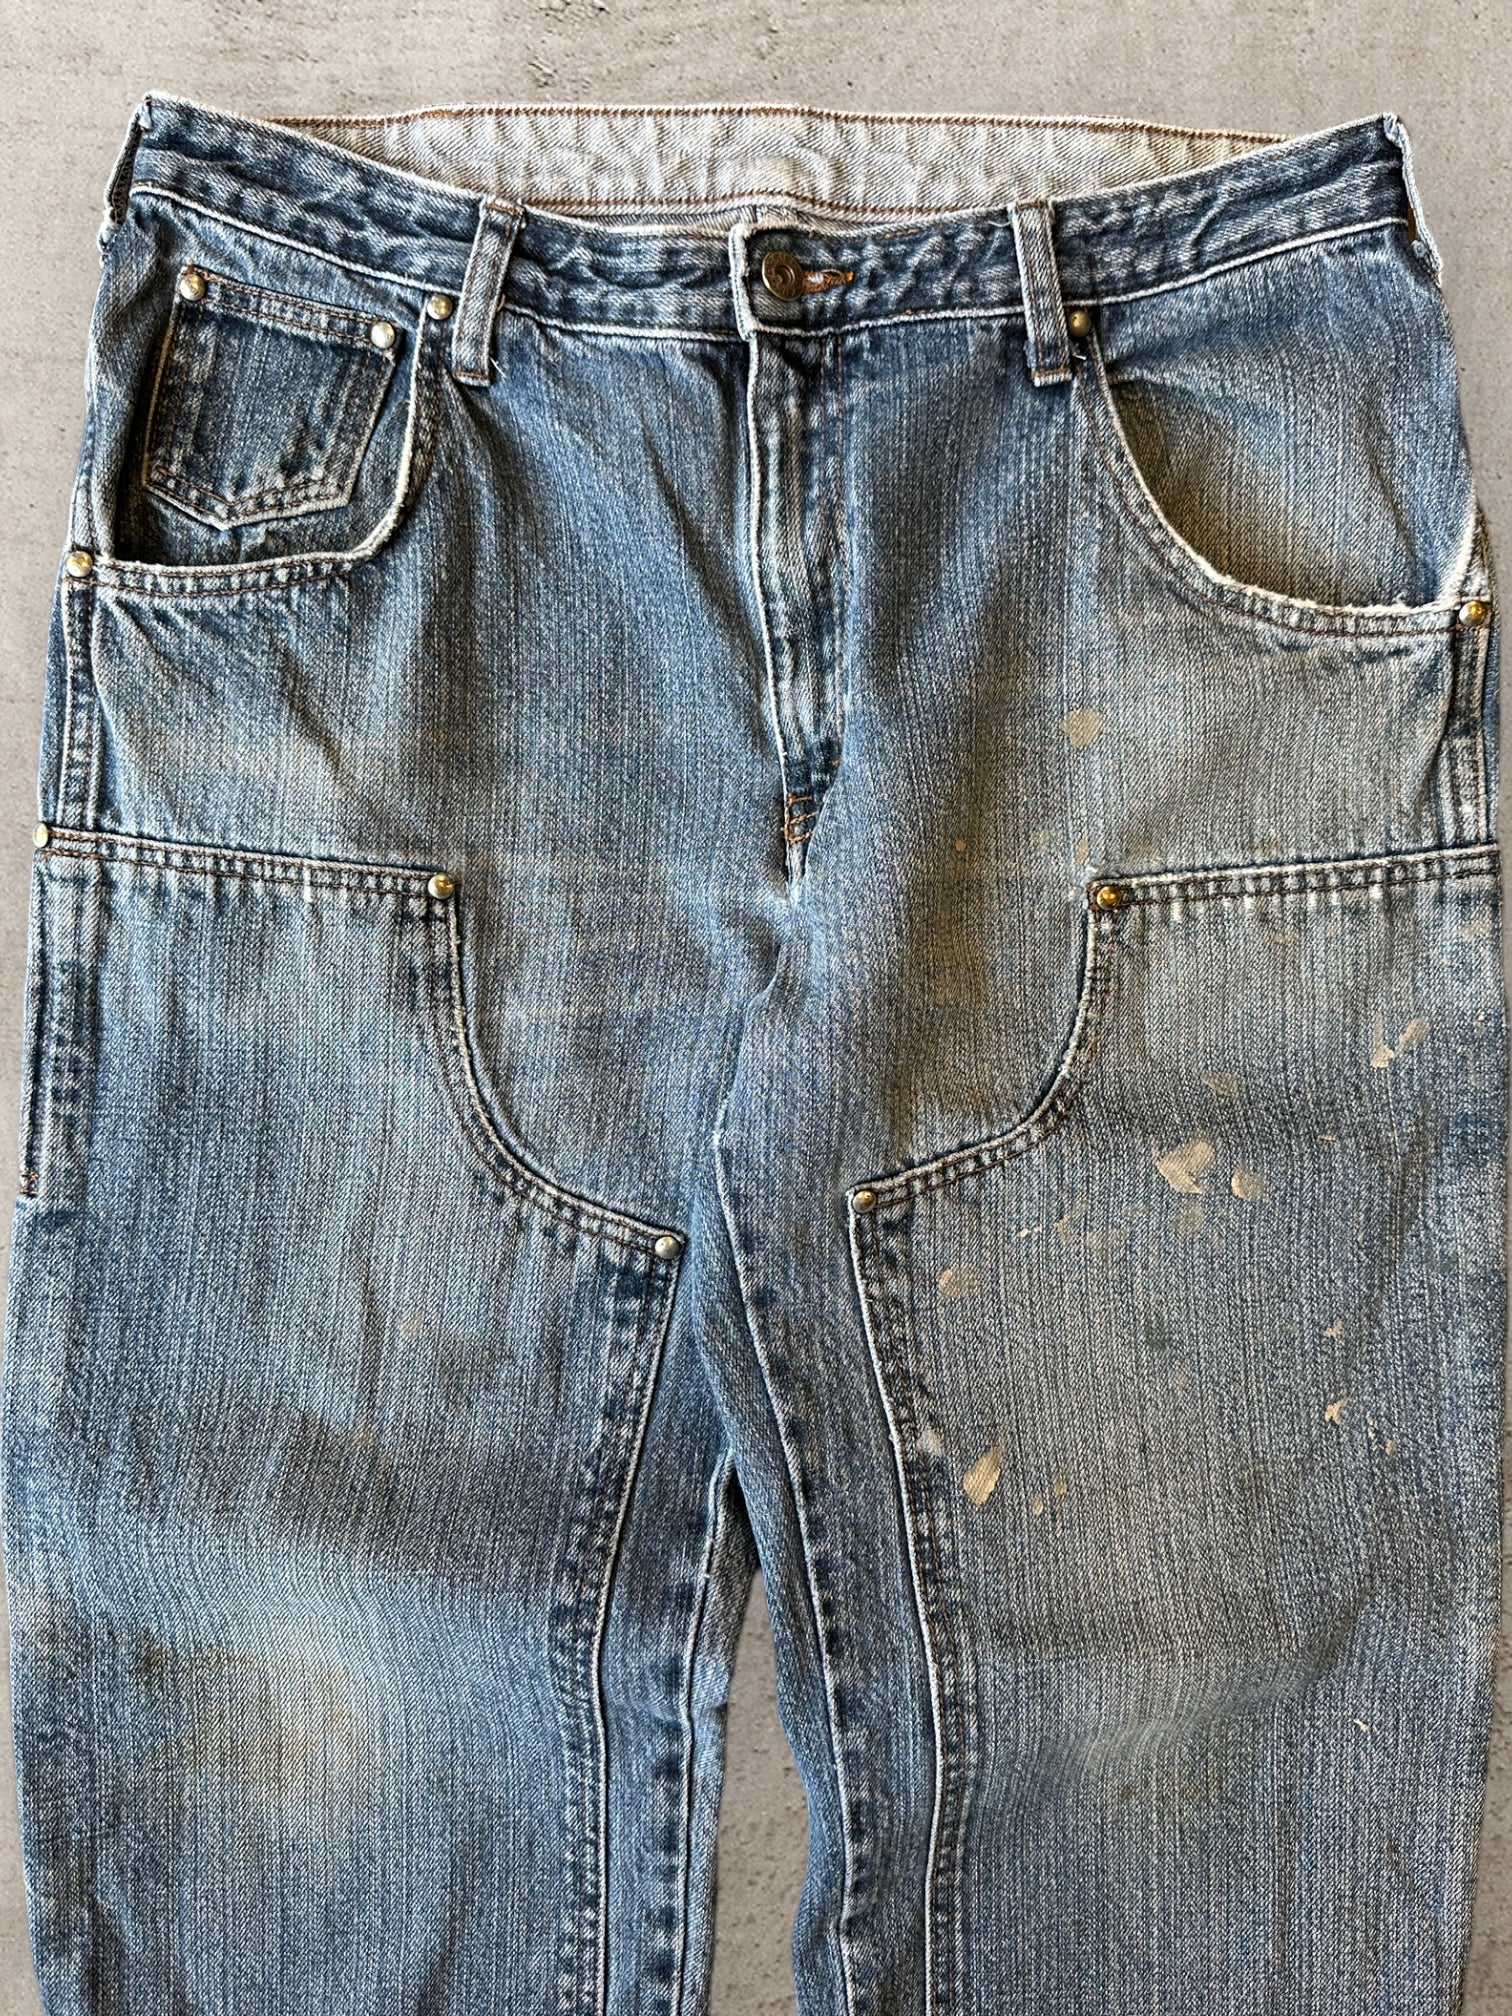 00s Dickies Double Knee Denim Jeans - 33x30